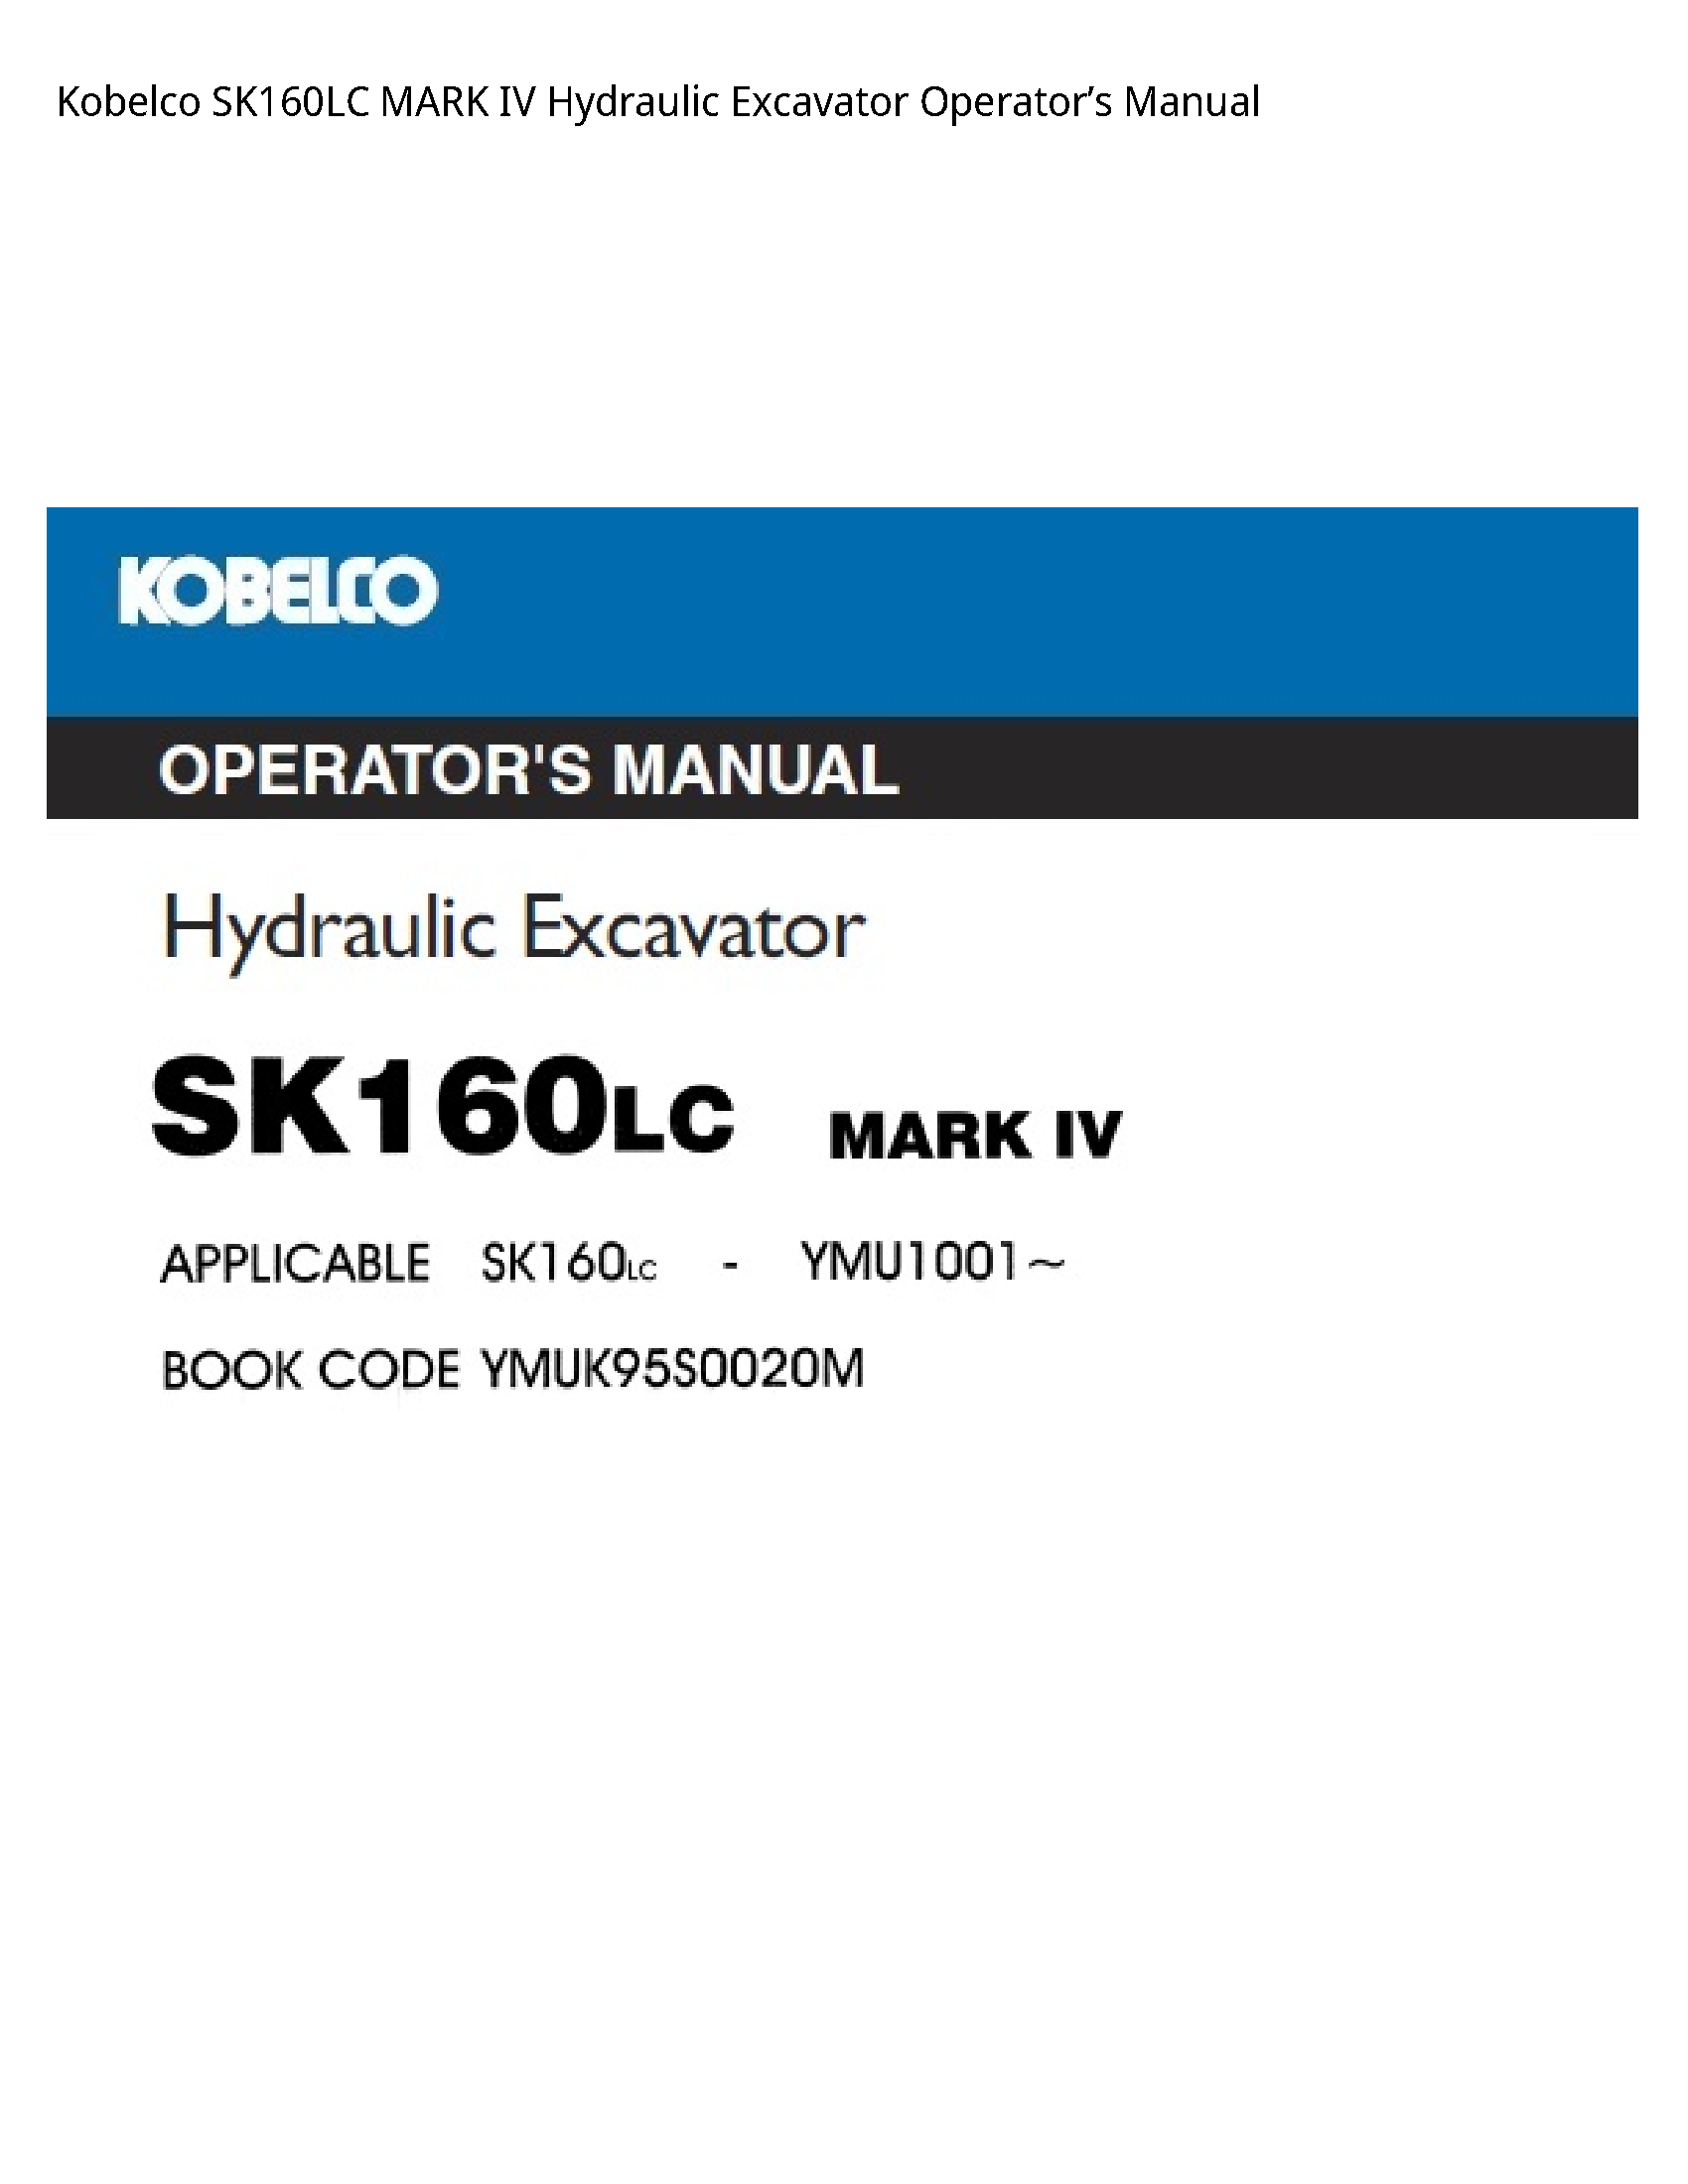 Kobelco SK160LC MARK IV Hydraulic Excavator Operator’s manual